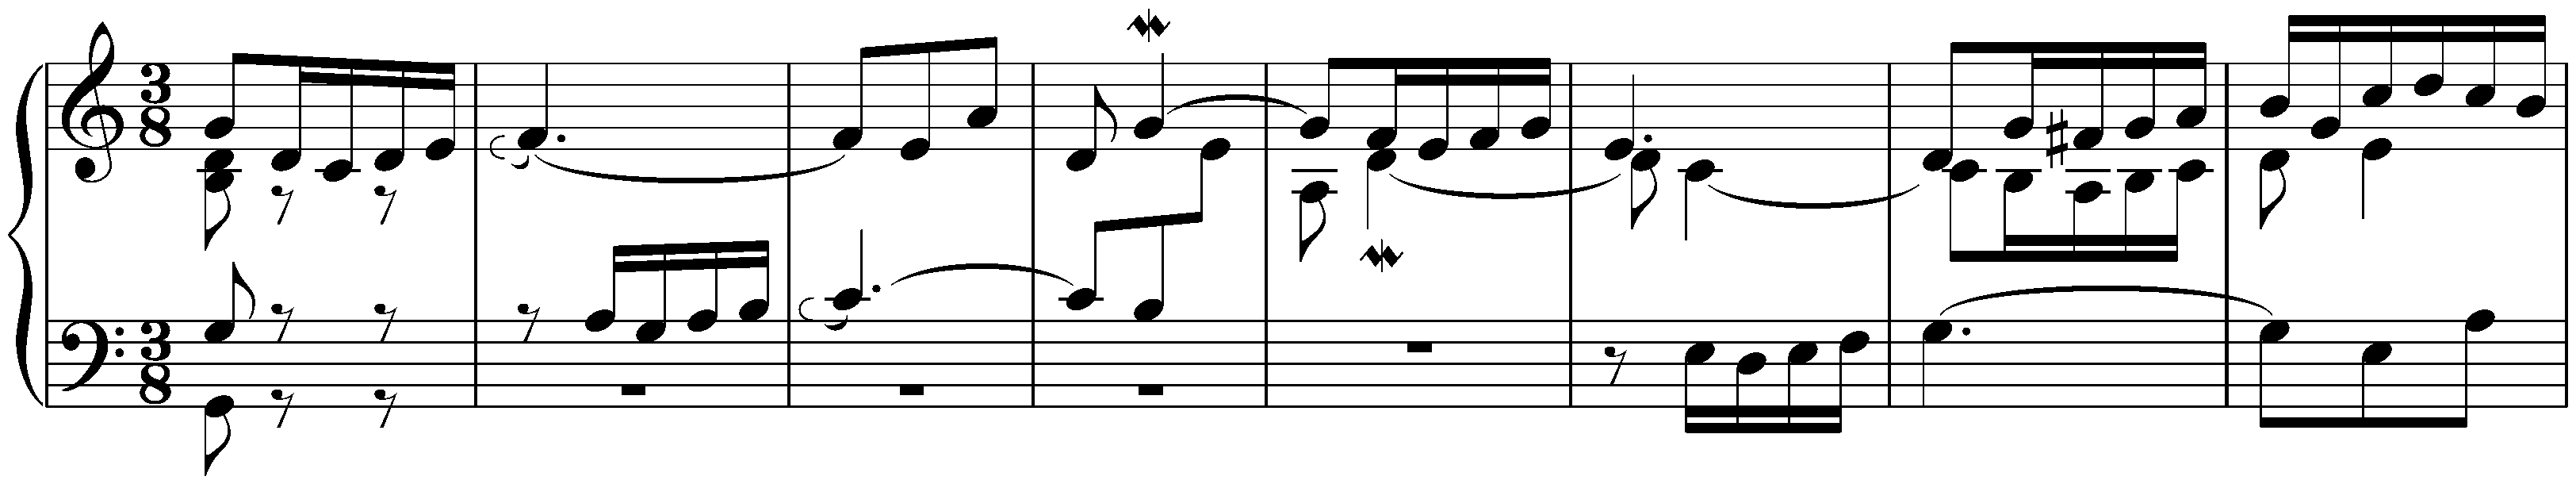 3. C-sharp major, BWV 872, Prelude (earlier version)